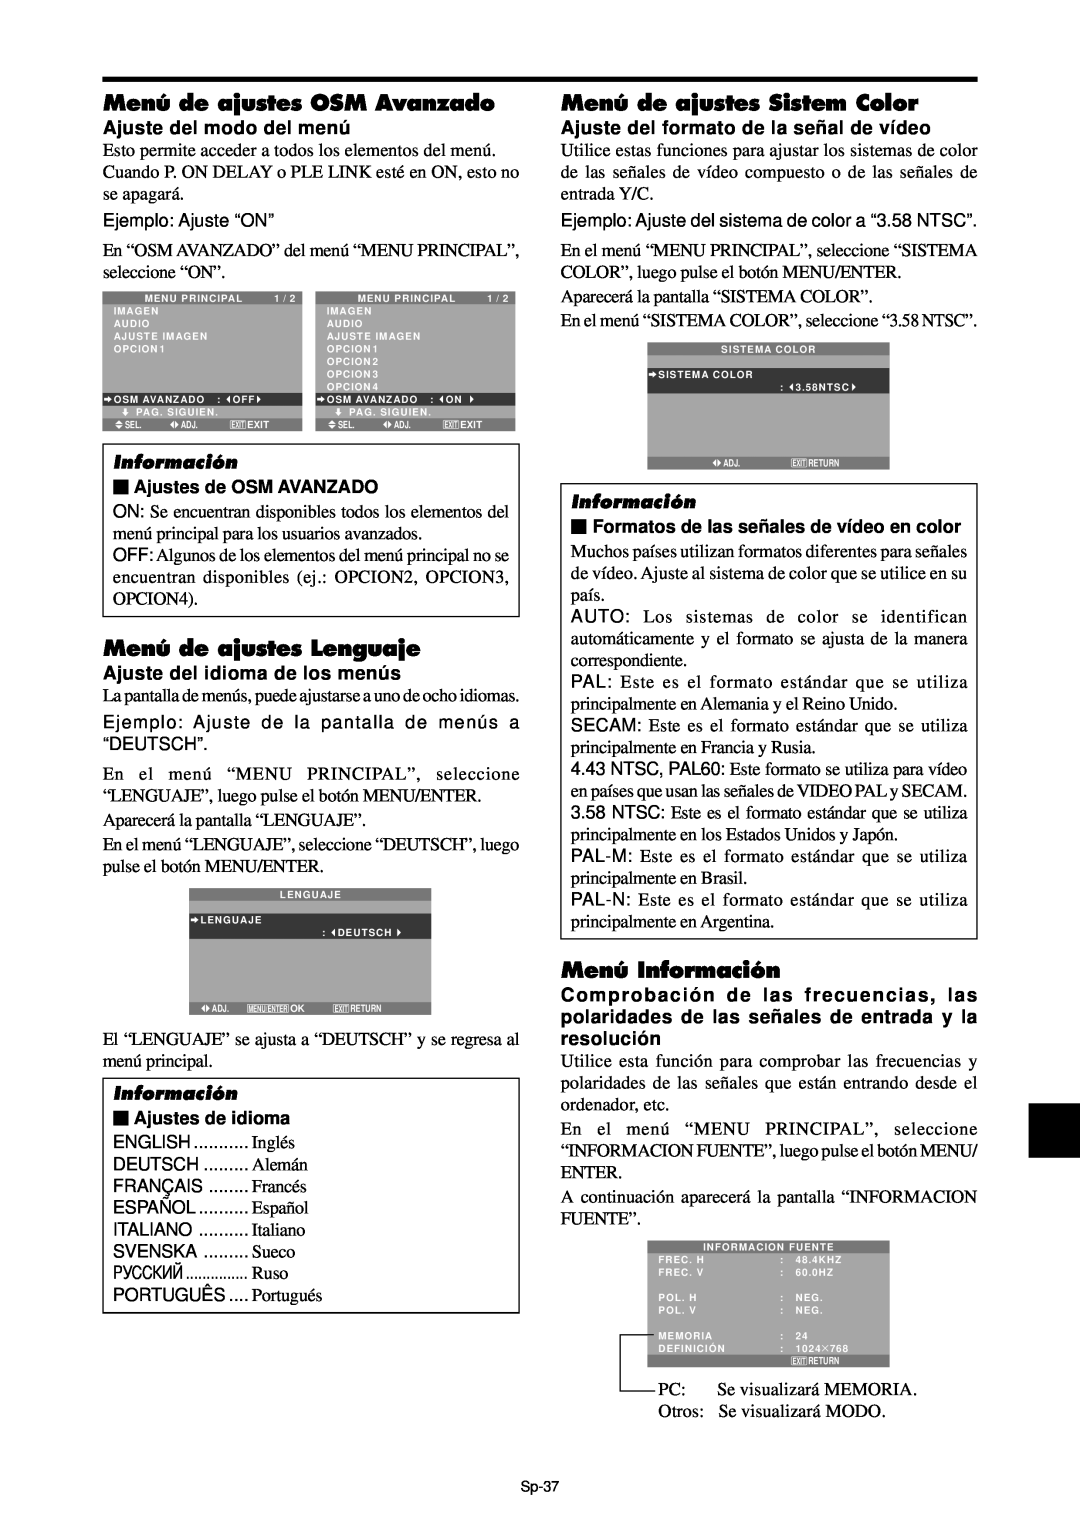 NEC PX-42XM4A manual Menú de ajustes OSM Avanzado, Menú de ajustes Lenguaje, Menú de ajustes Sistem Color, Menú Información 